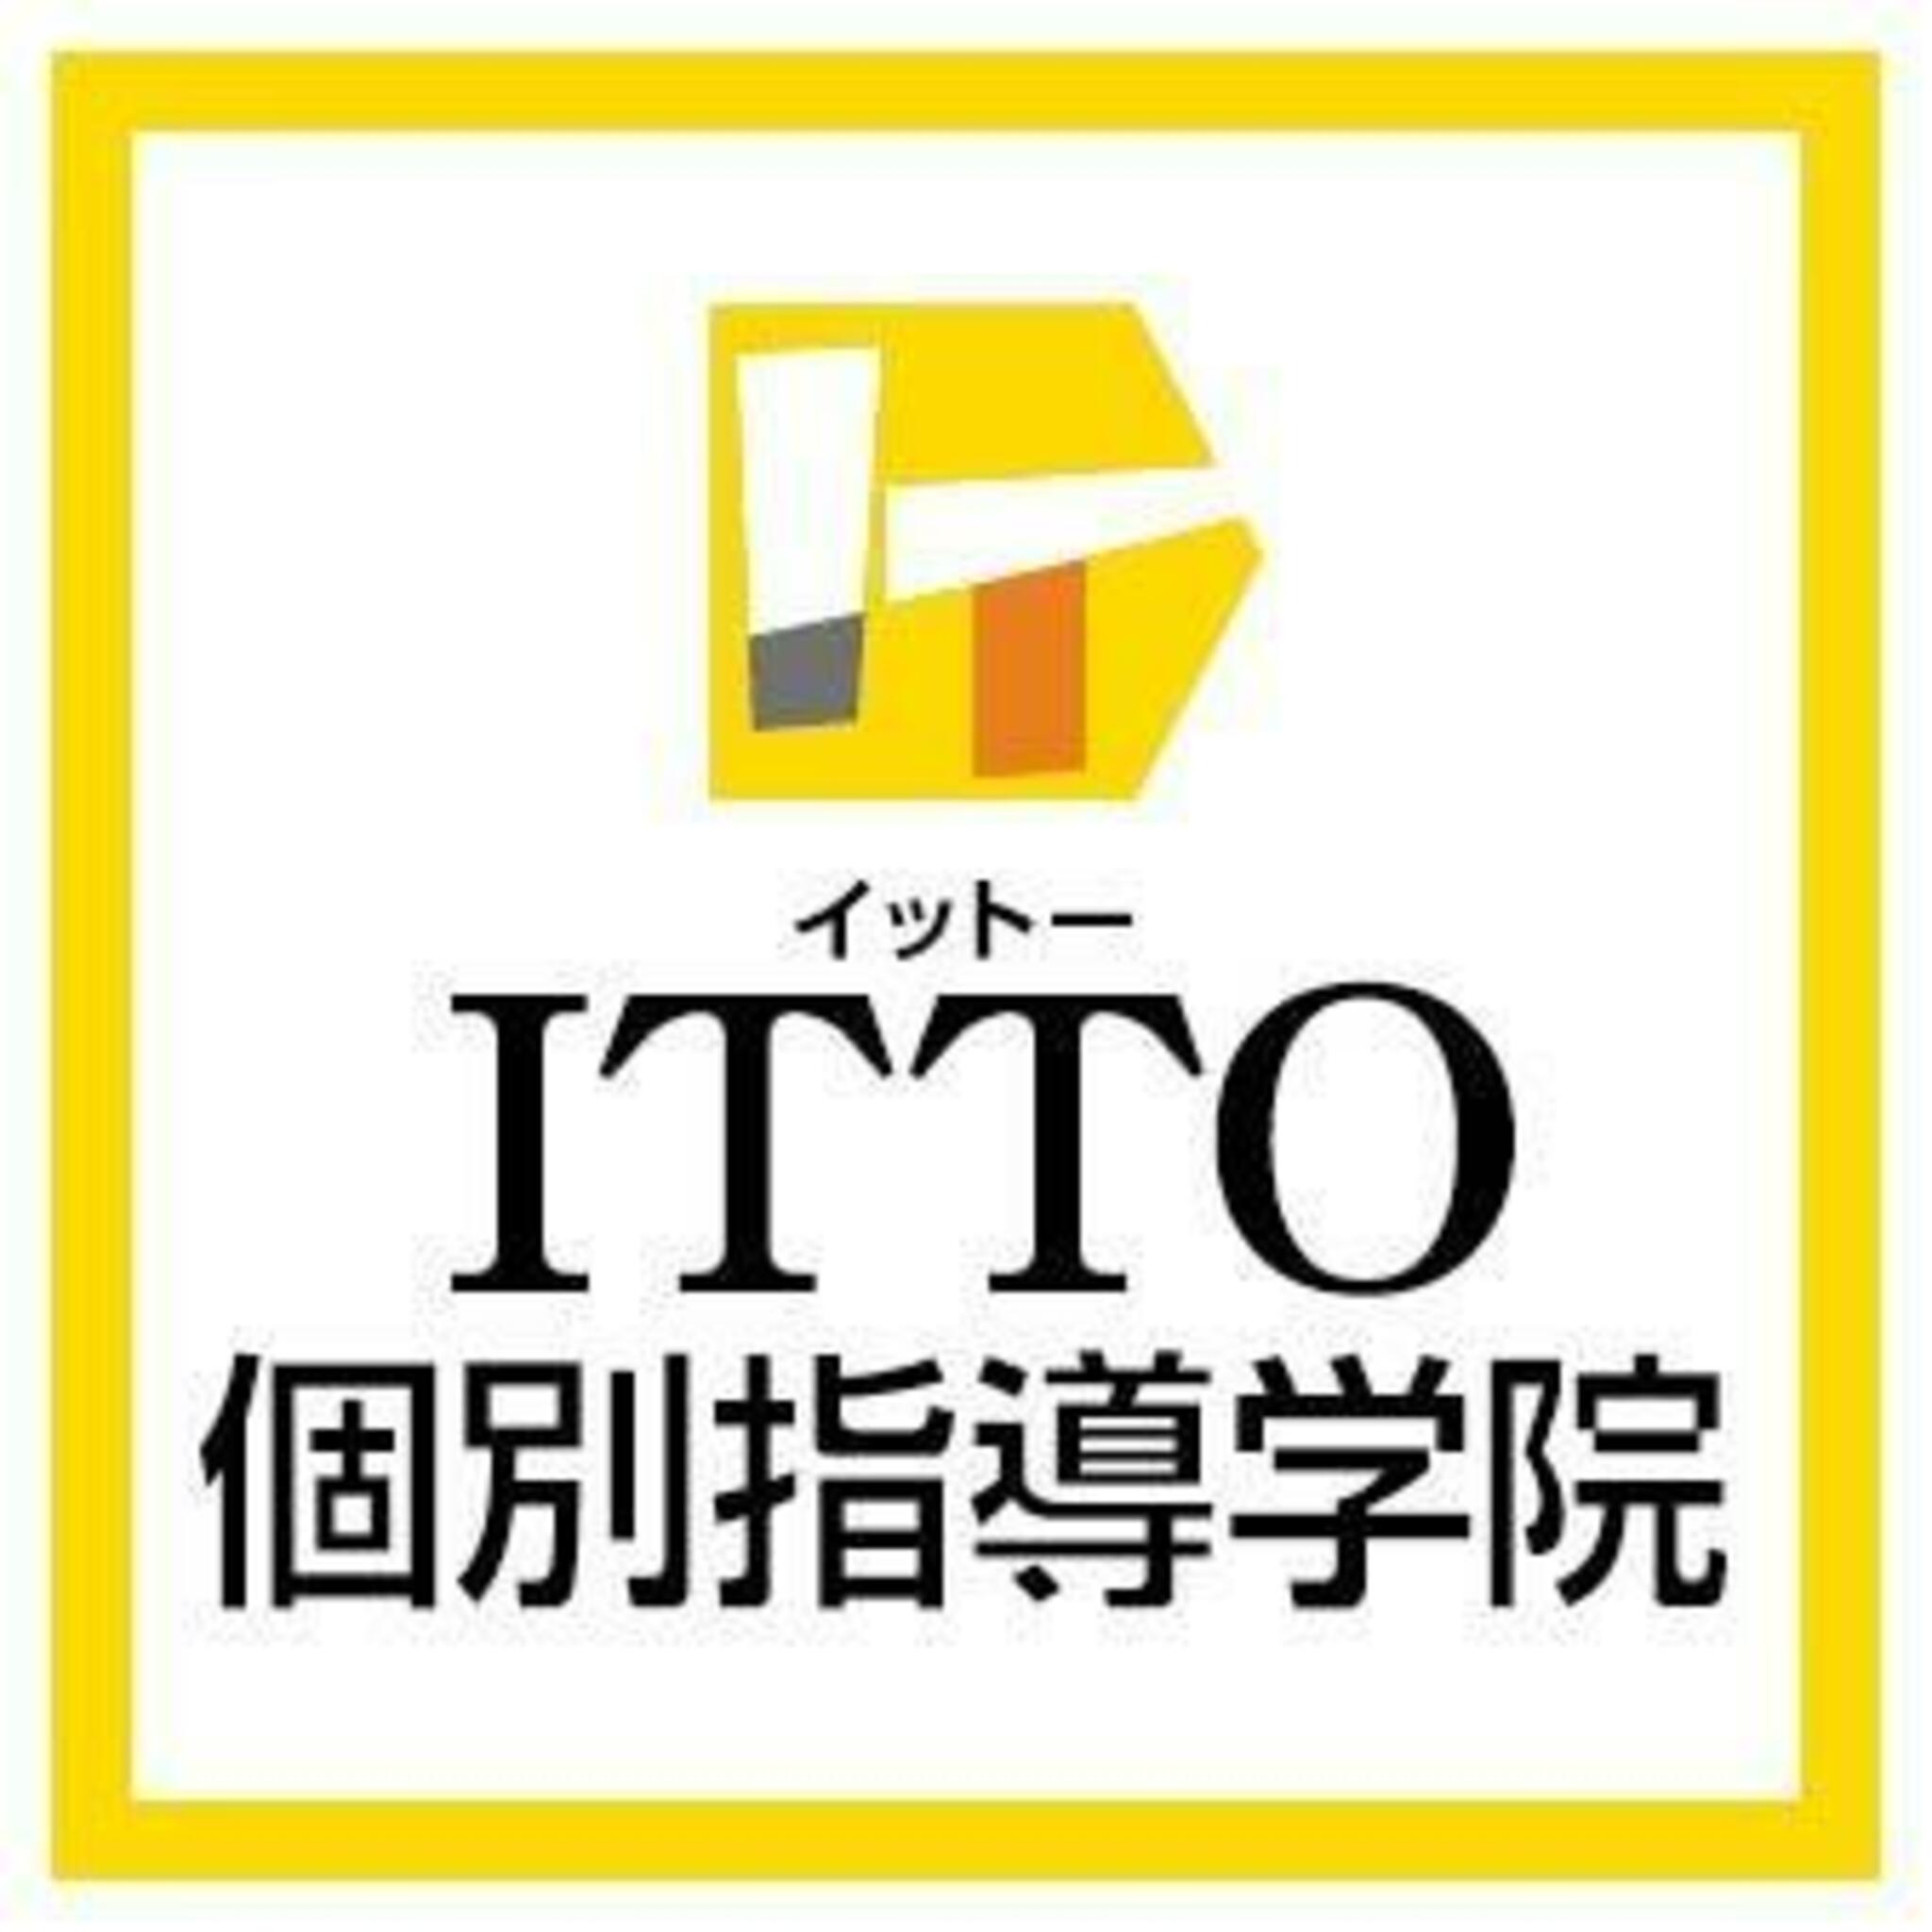 ITTO個別指導学院 師勝校の代表写真8